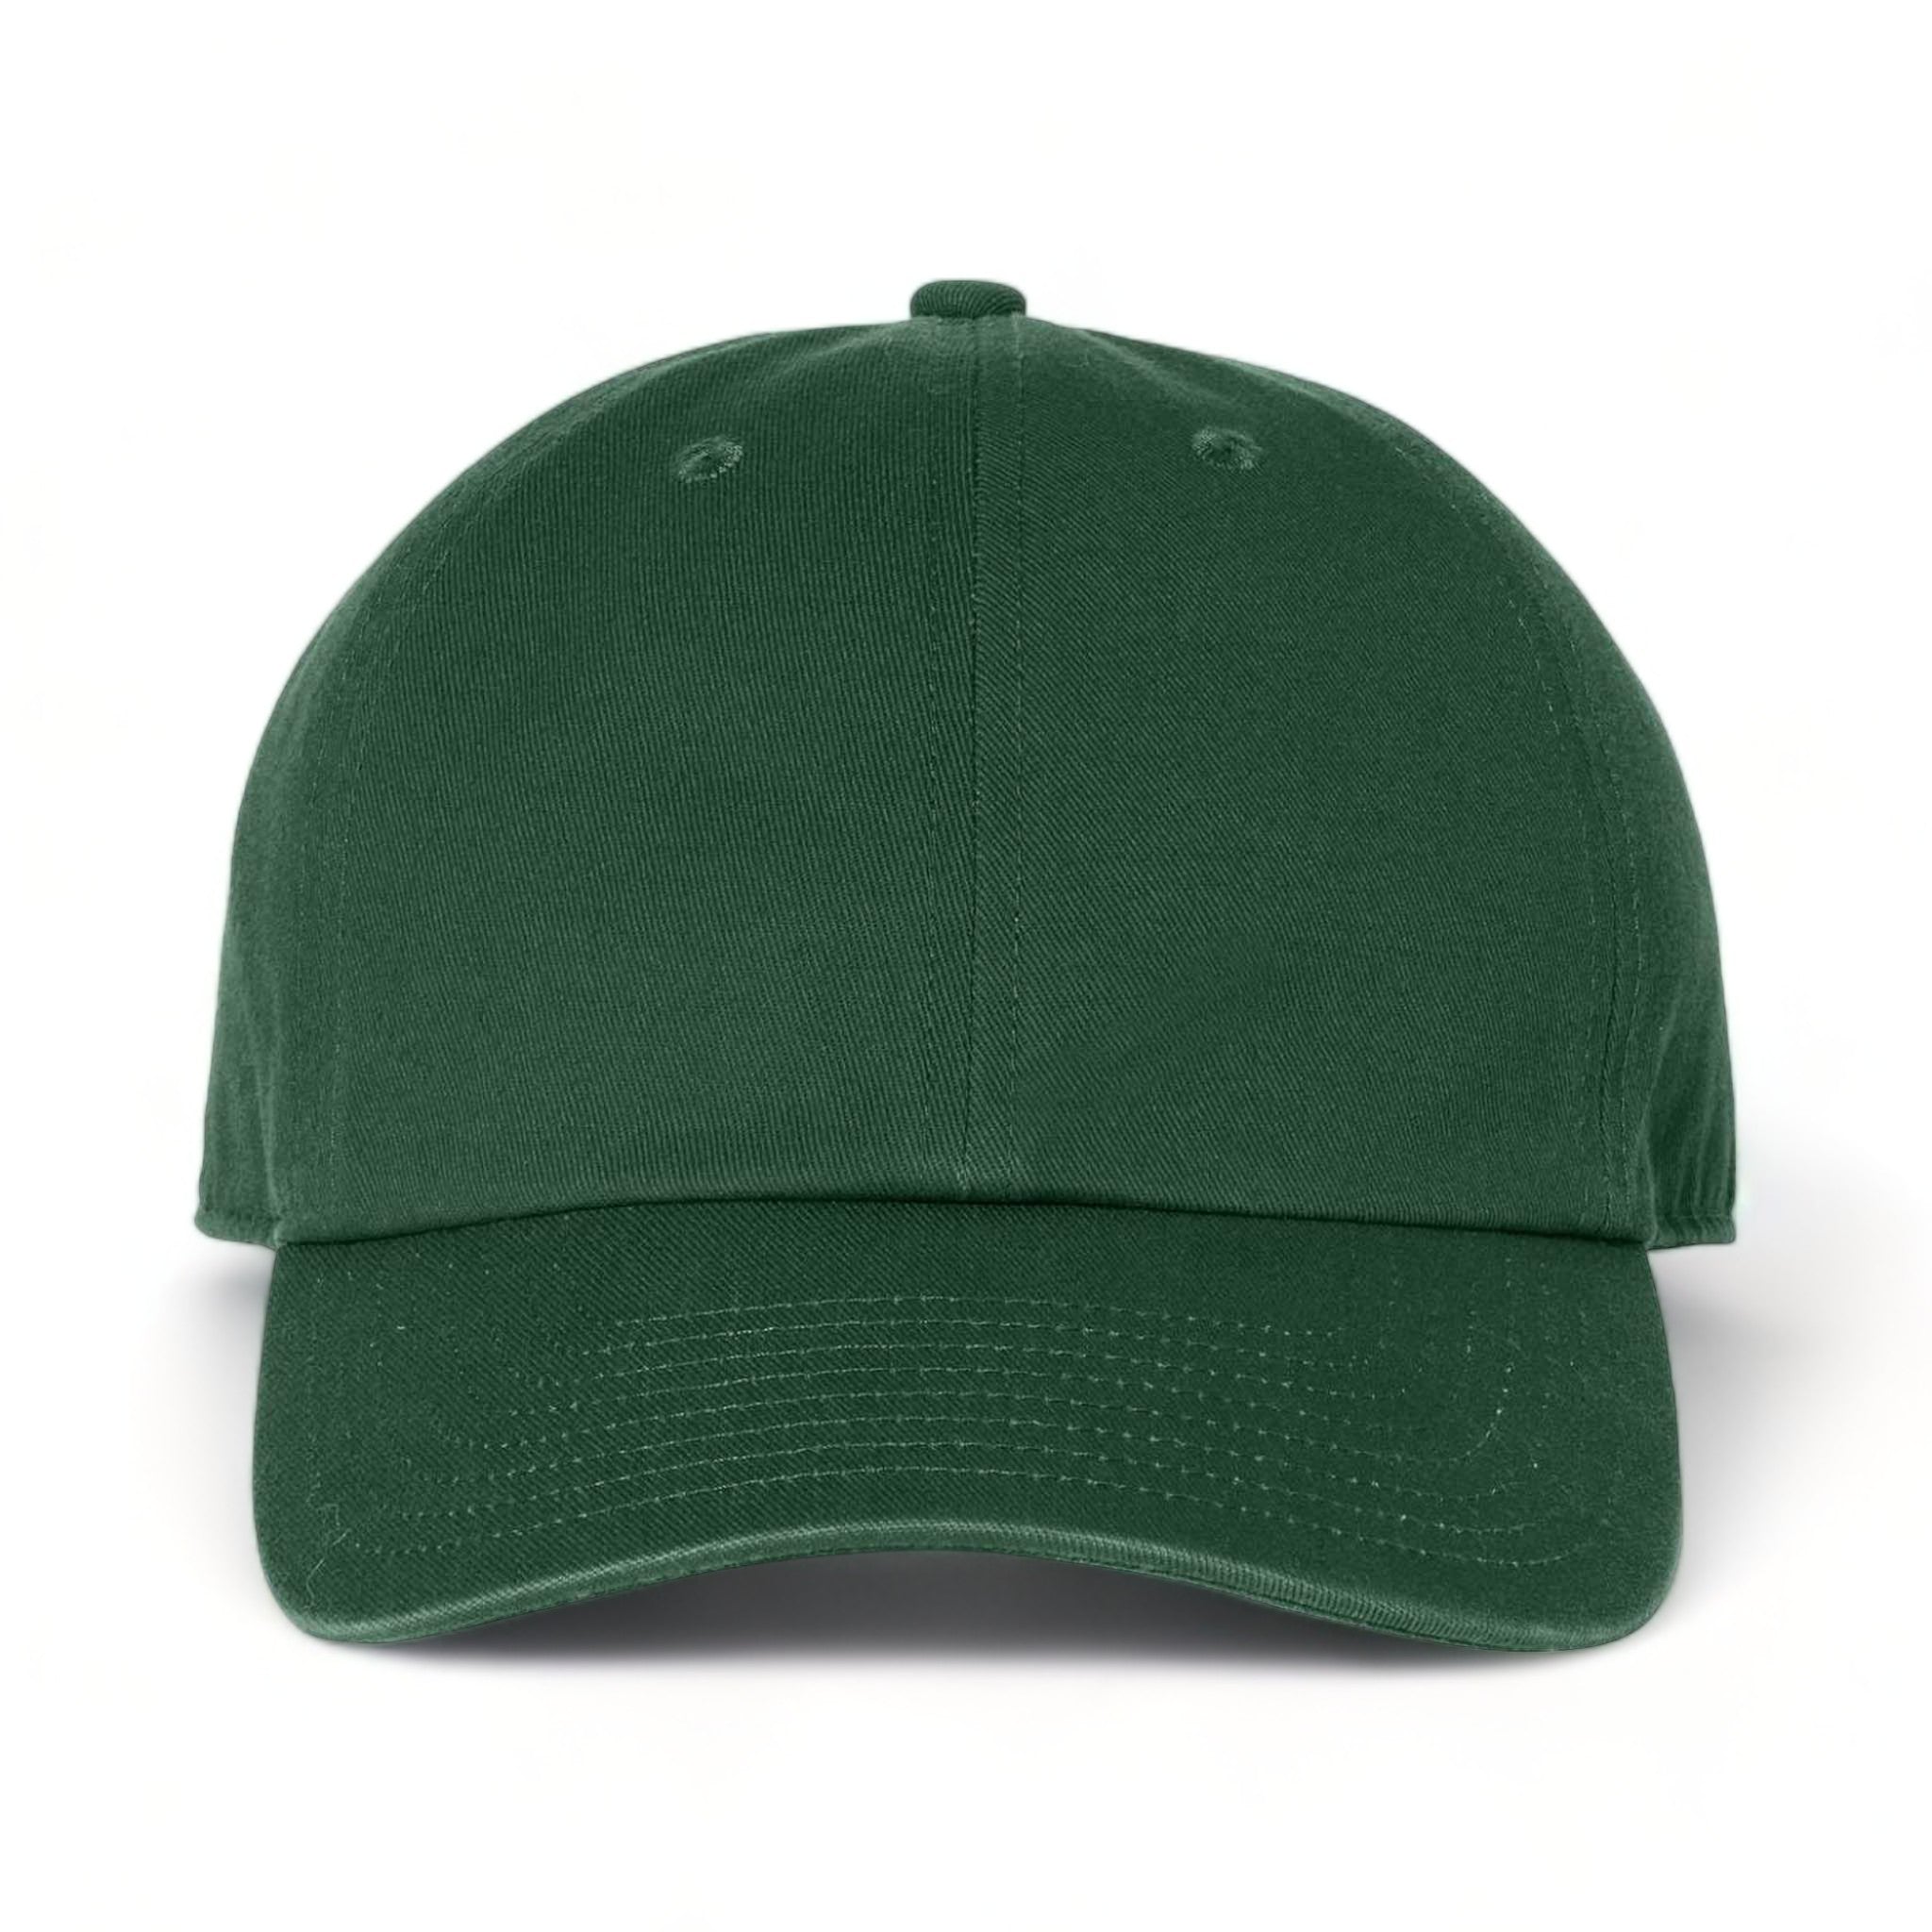 Front view of 47 Brand 4700 custom hat in dark green